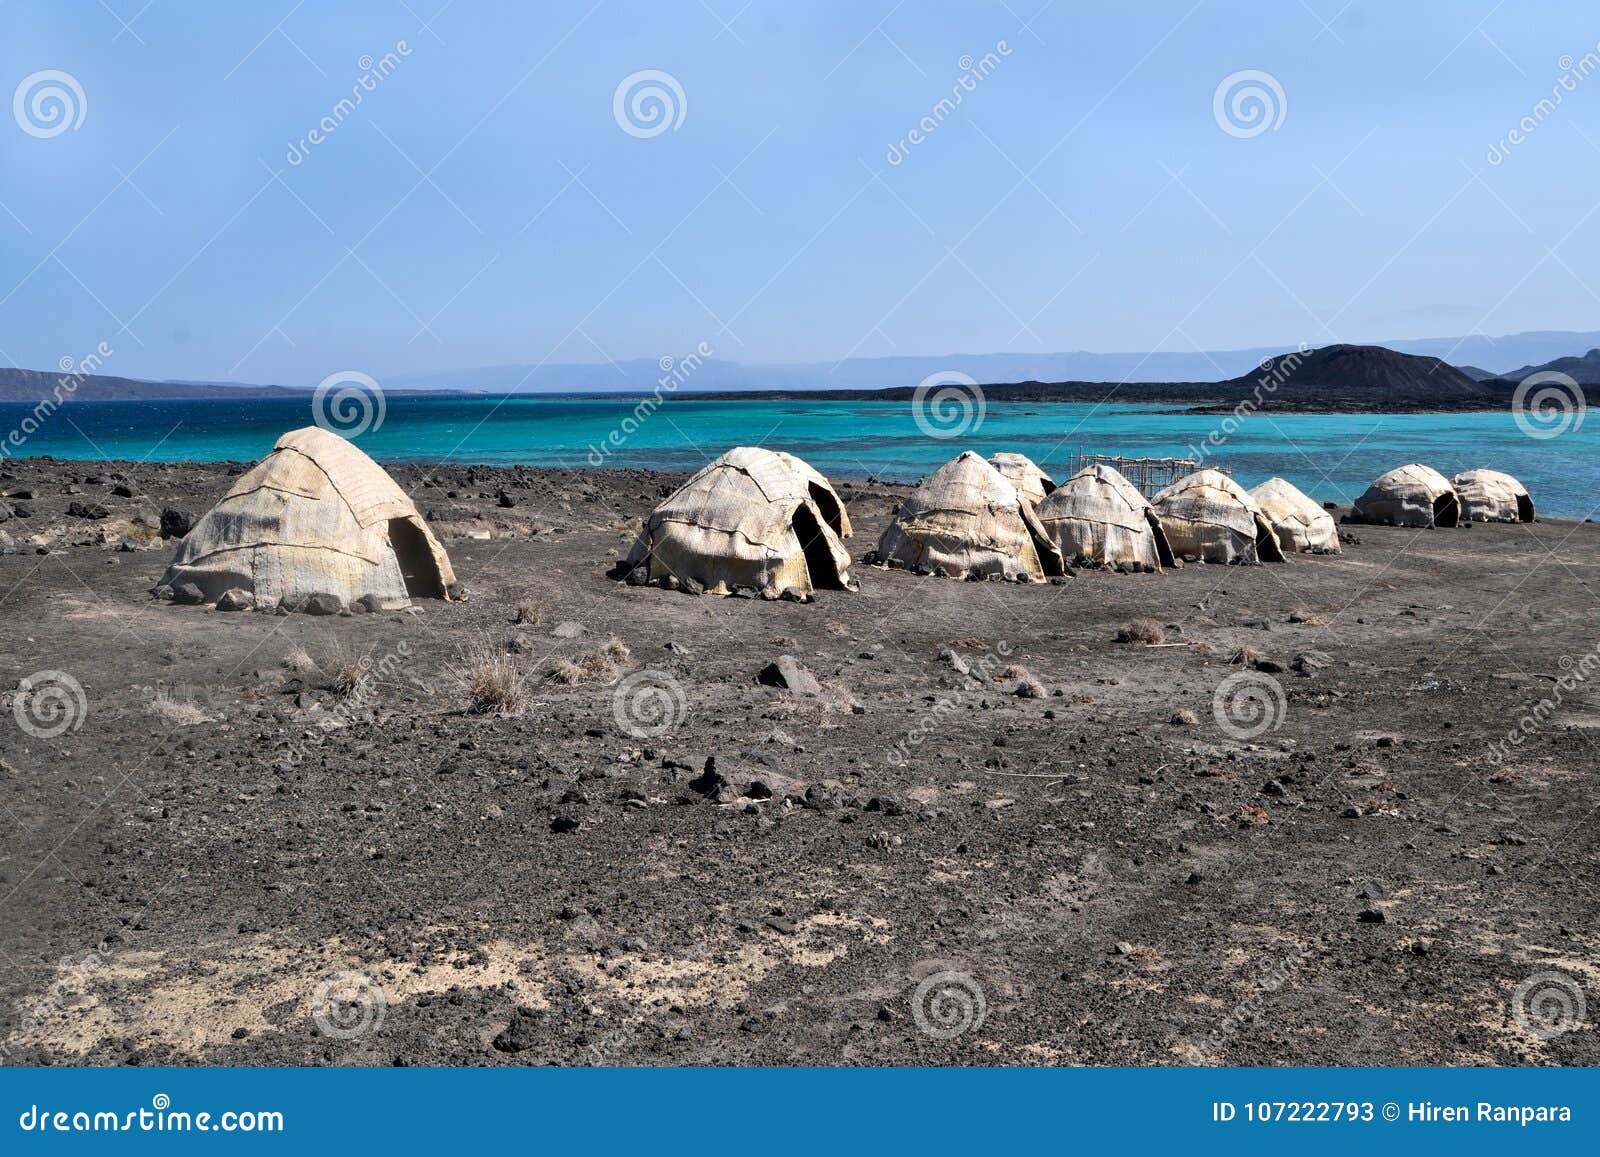 afar tents / huts ghoubet beach, devils island ghoubbet-el-kharab djibouti east africa